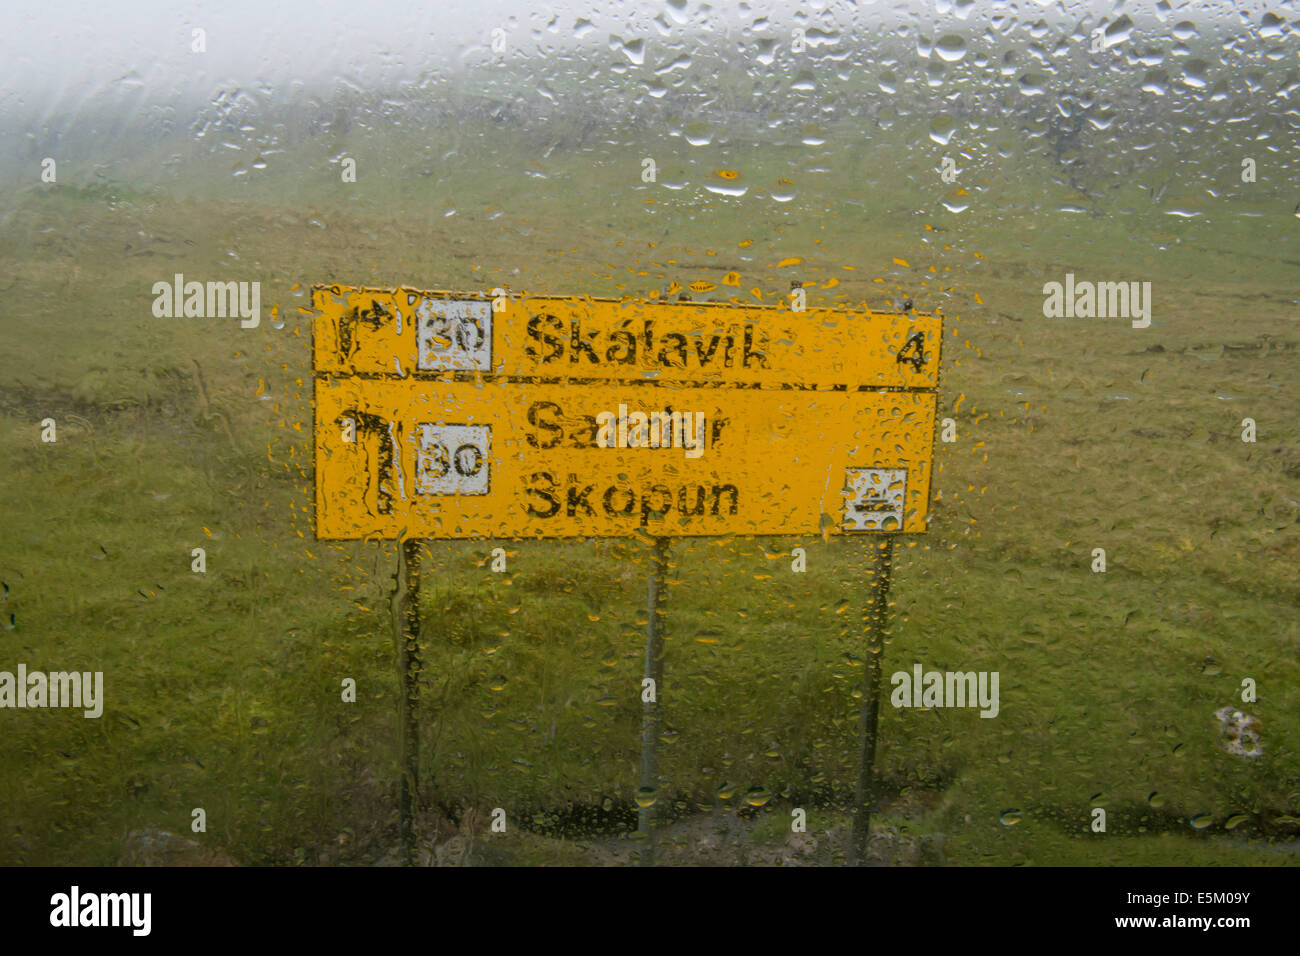 Rain on a windshield, signpost, Sandoy, Faroe Islands, Denmark Stock Photo